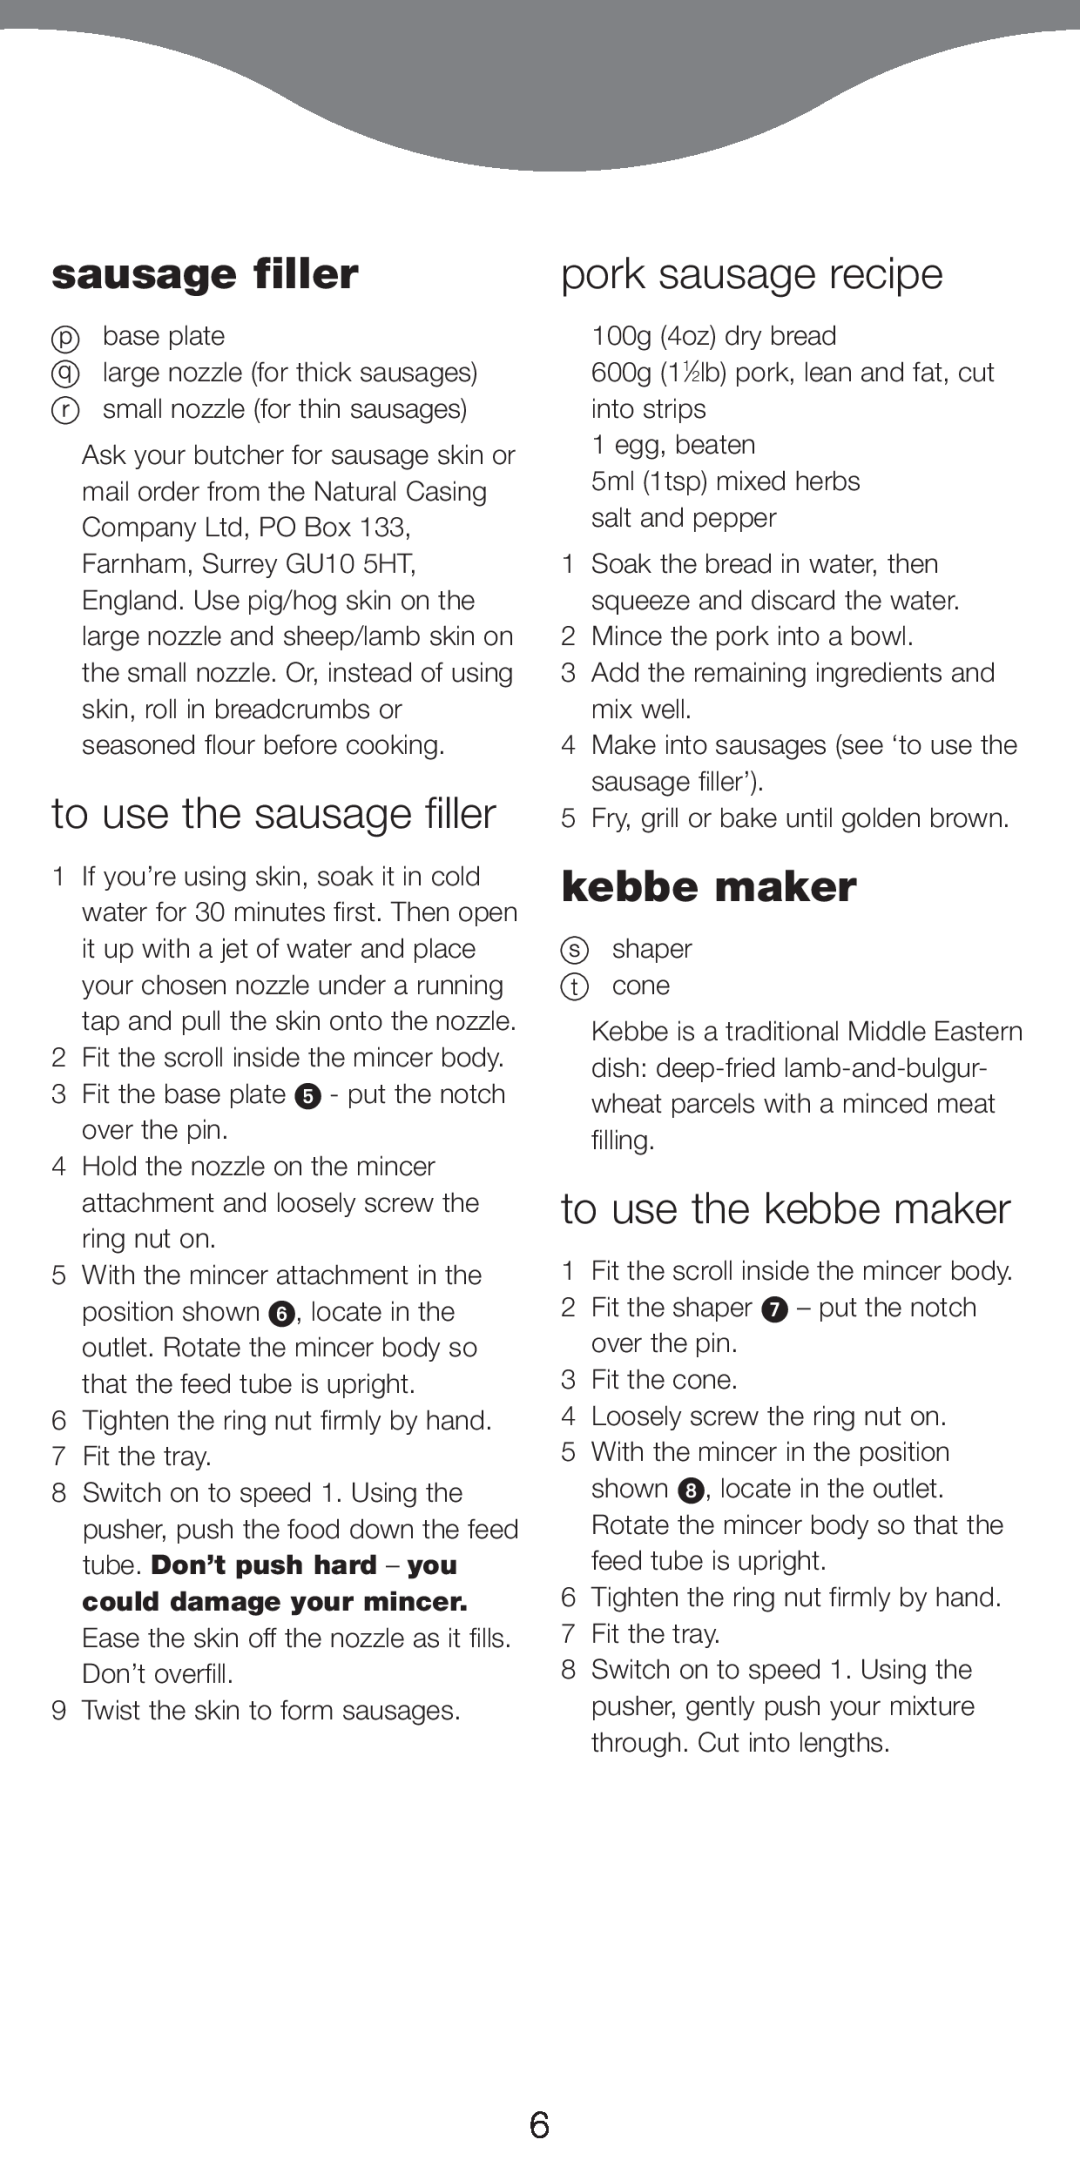 Kenwood MG700 manual to use the sausage filler, pork sausage recipe, to use the kebbe maker 